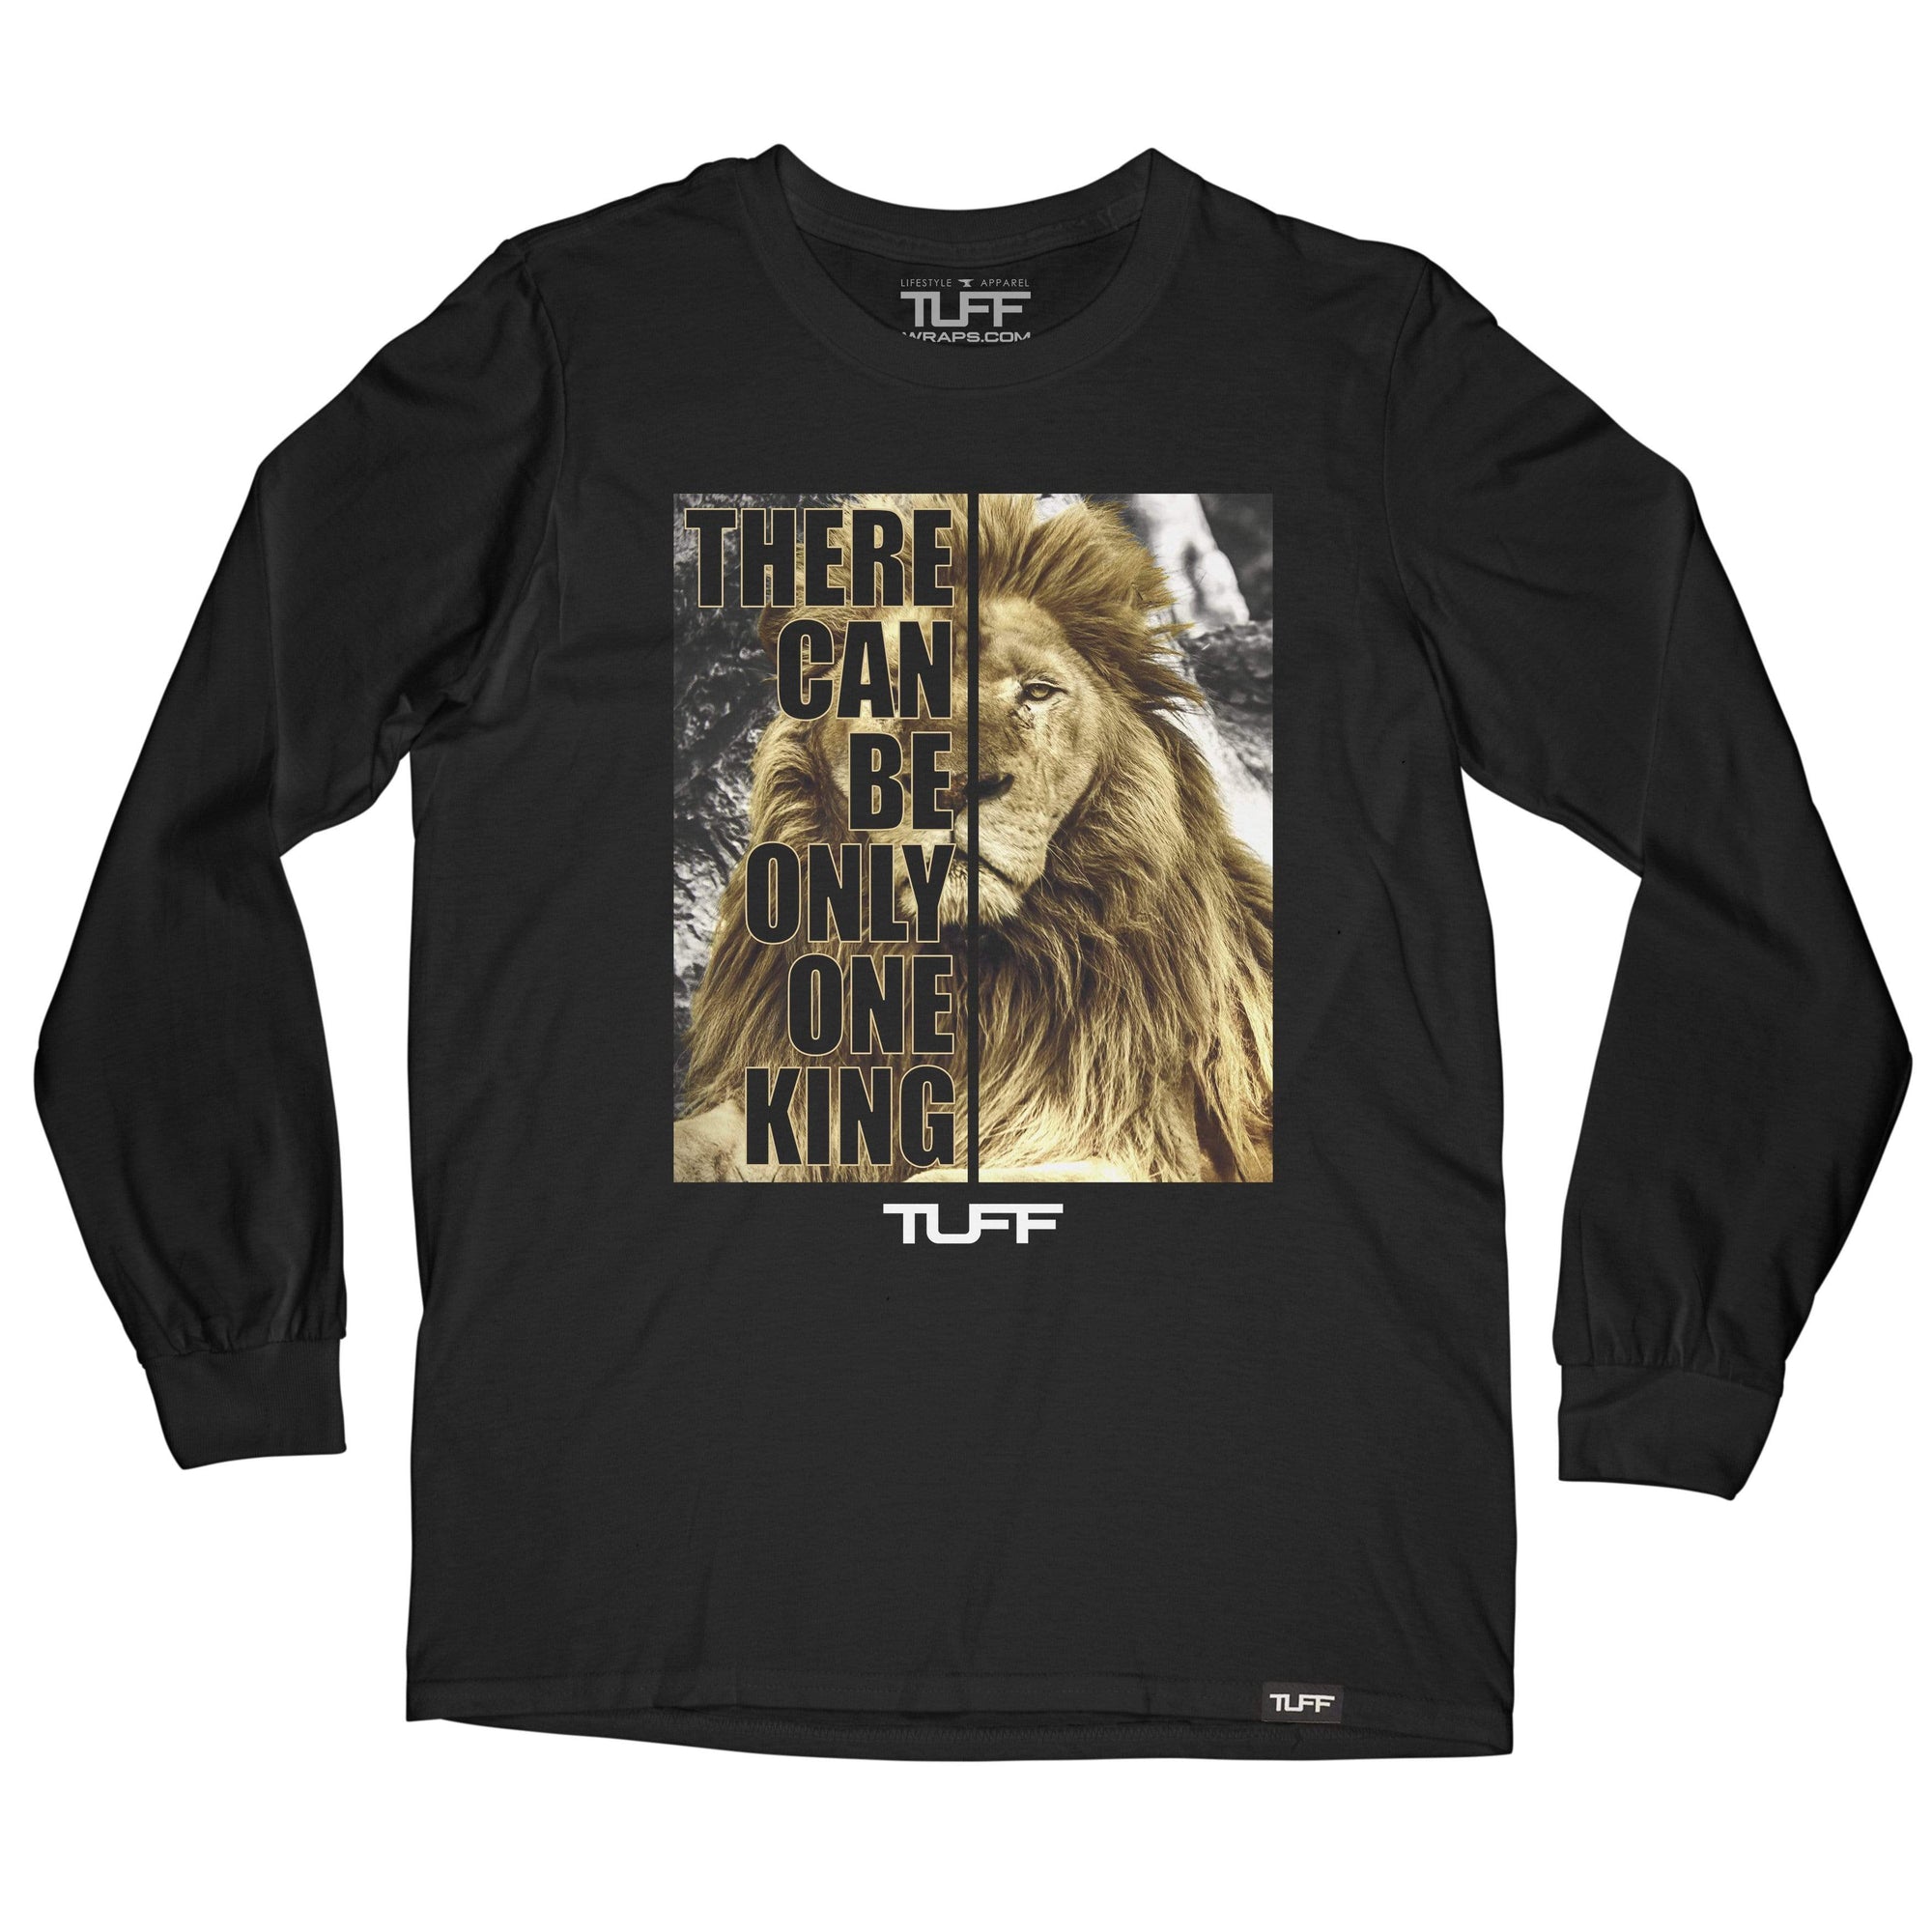 The Lion King Long Sleeve Tee Men's Long Sleeve T-Shirt